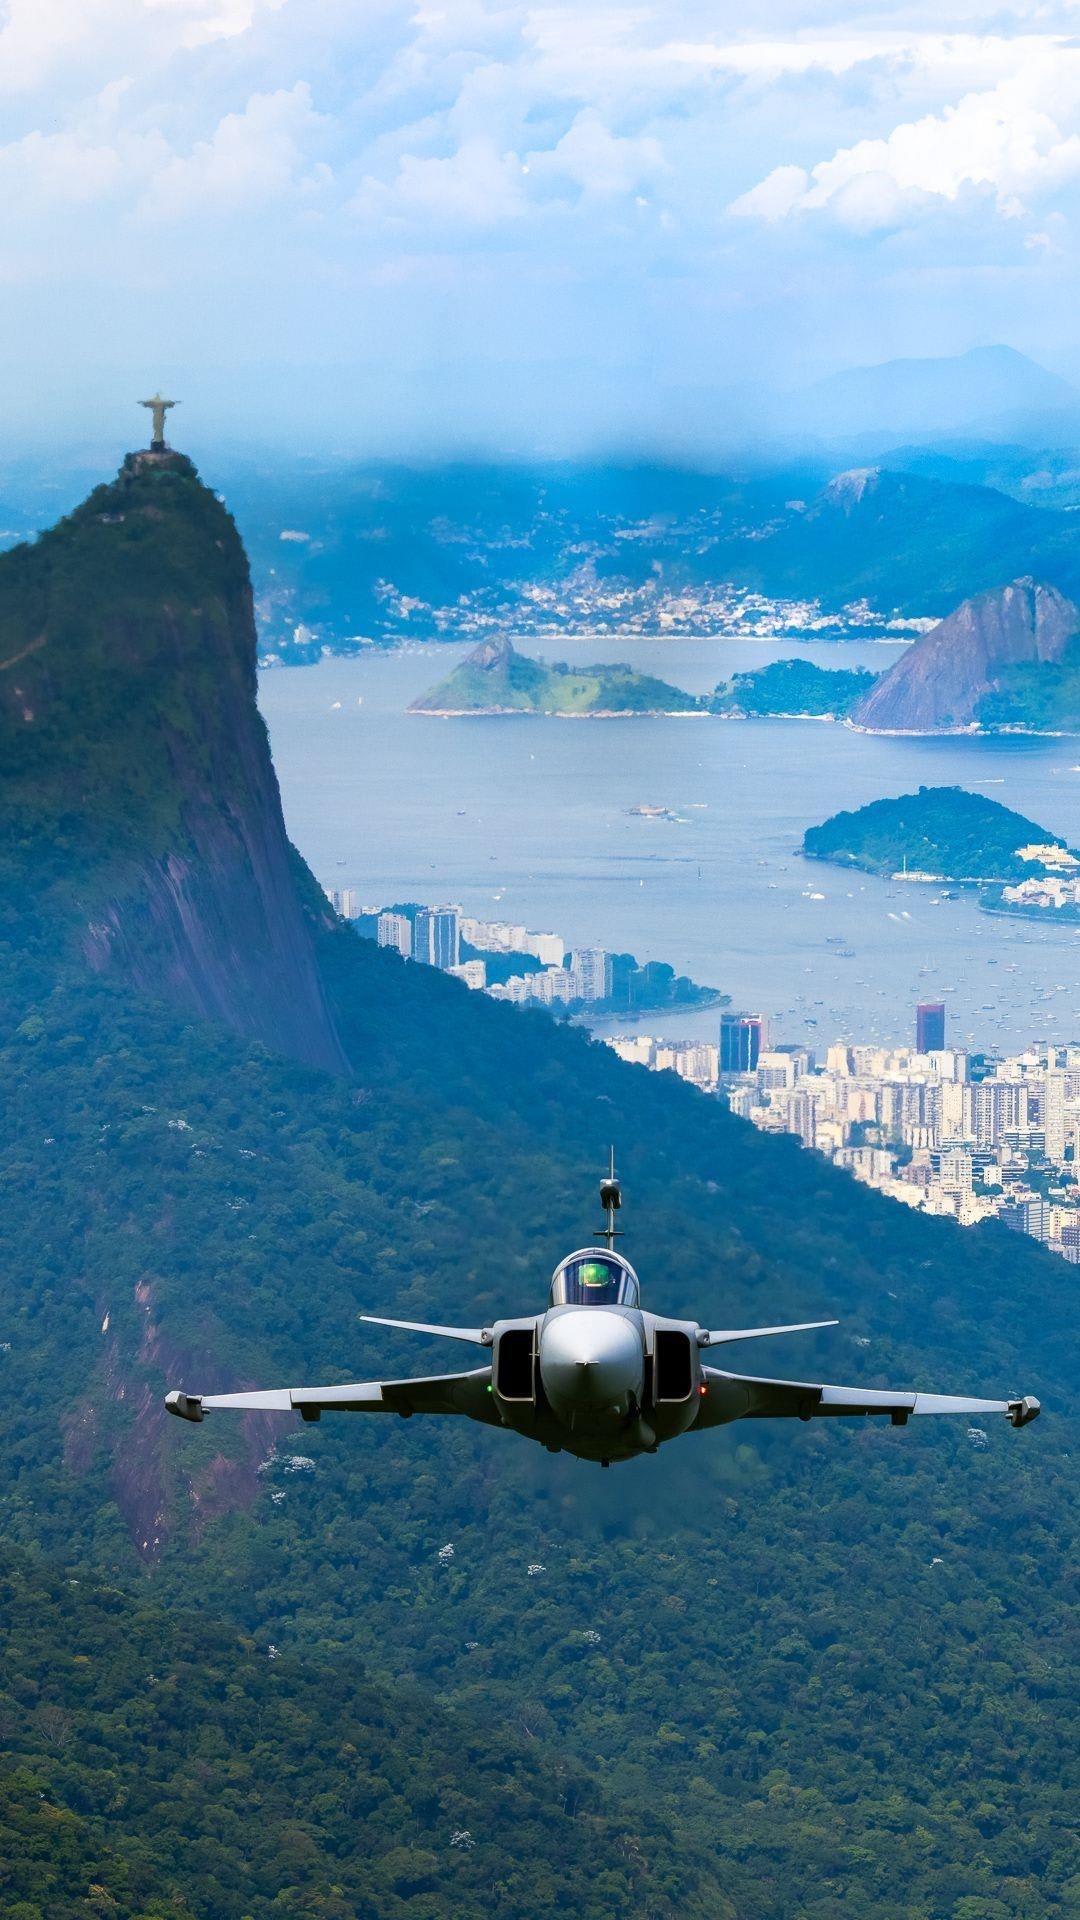 F-39-Gripen-voa-sobre-o-Rio-de-Janeiro-7.jpg